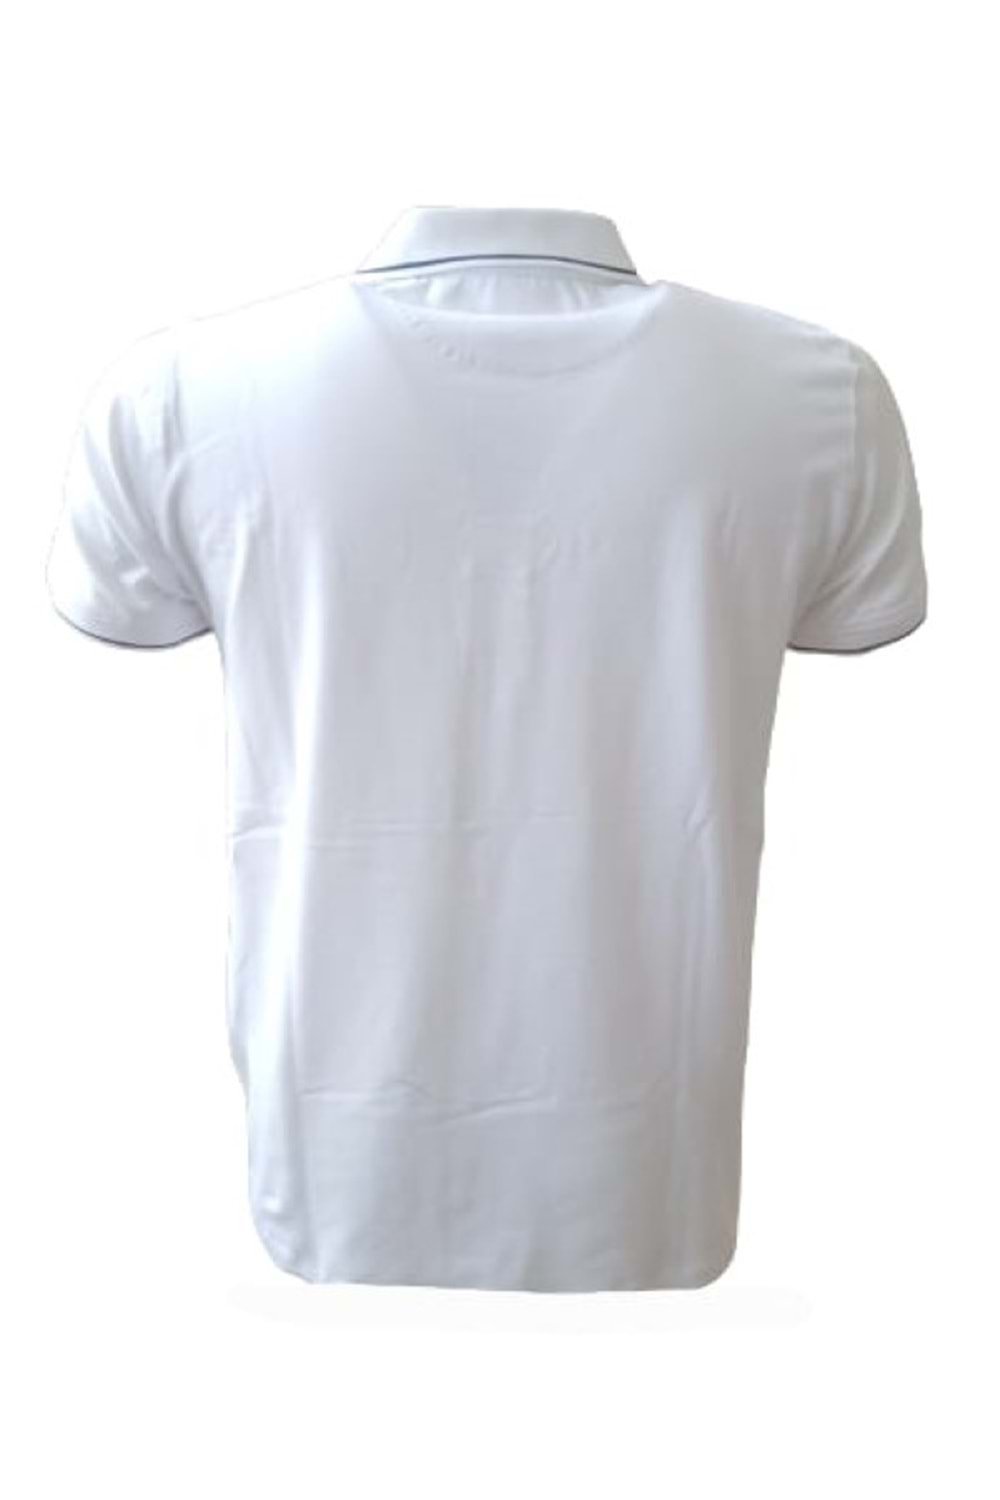 Rey Polo Erkek Basic Polo Yaka Kısa Kol T-shirt 466 - Beyaz - L